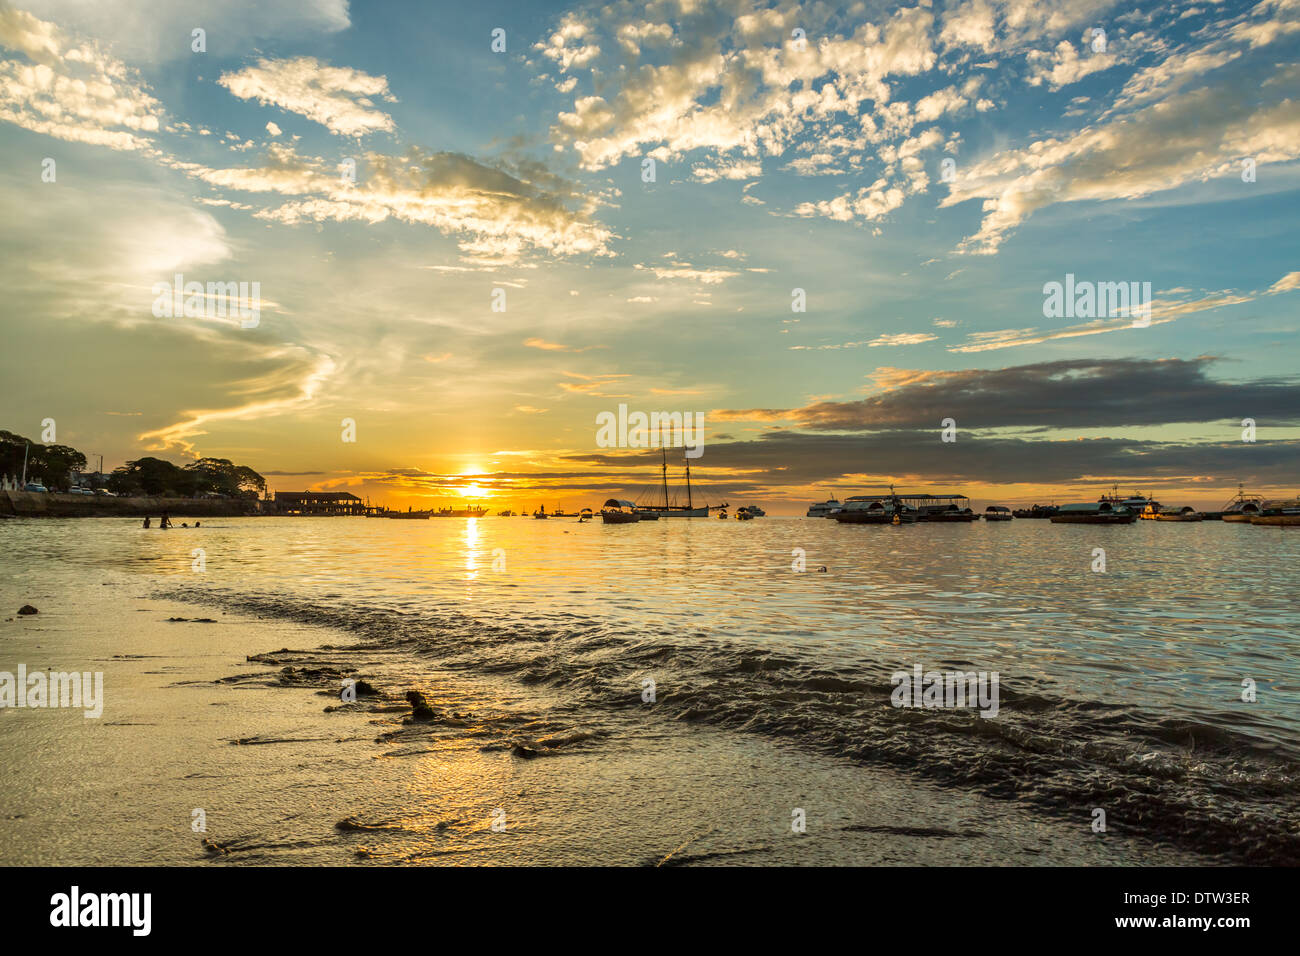 Sun setting the shores of the Indian Ocean in Zanzibar, Tanzania Stock Photo